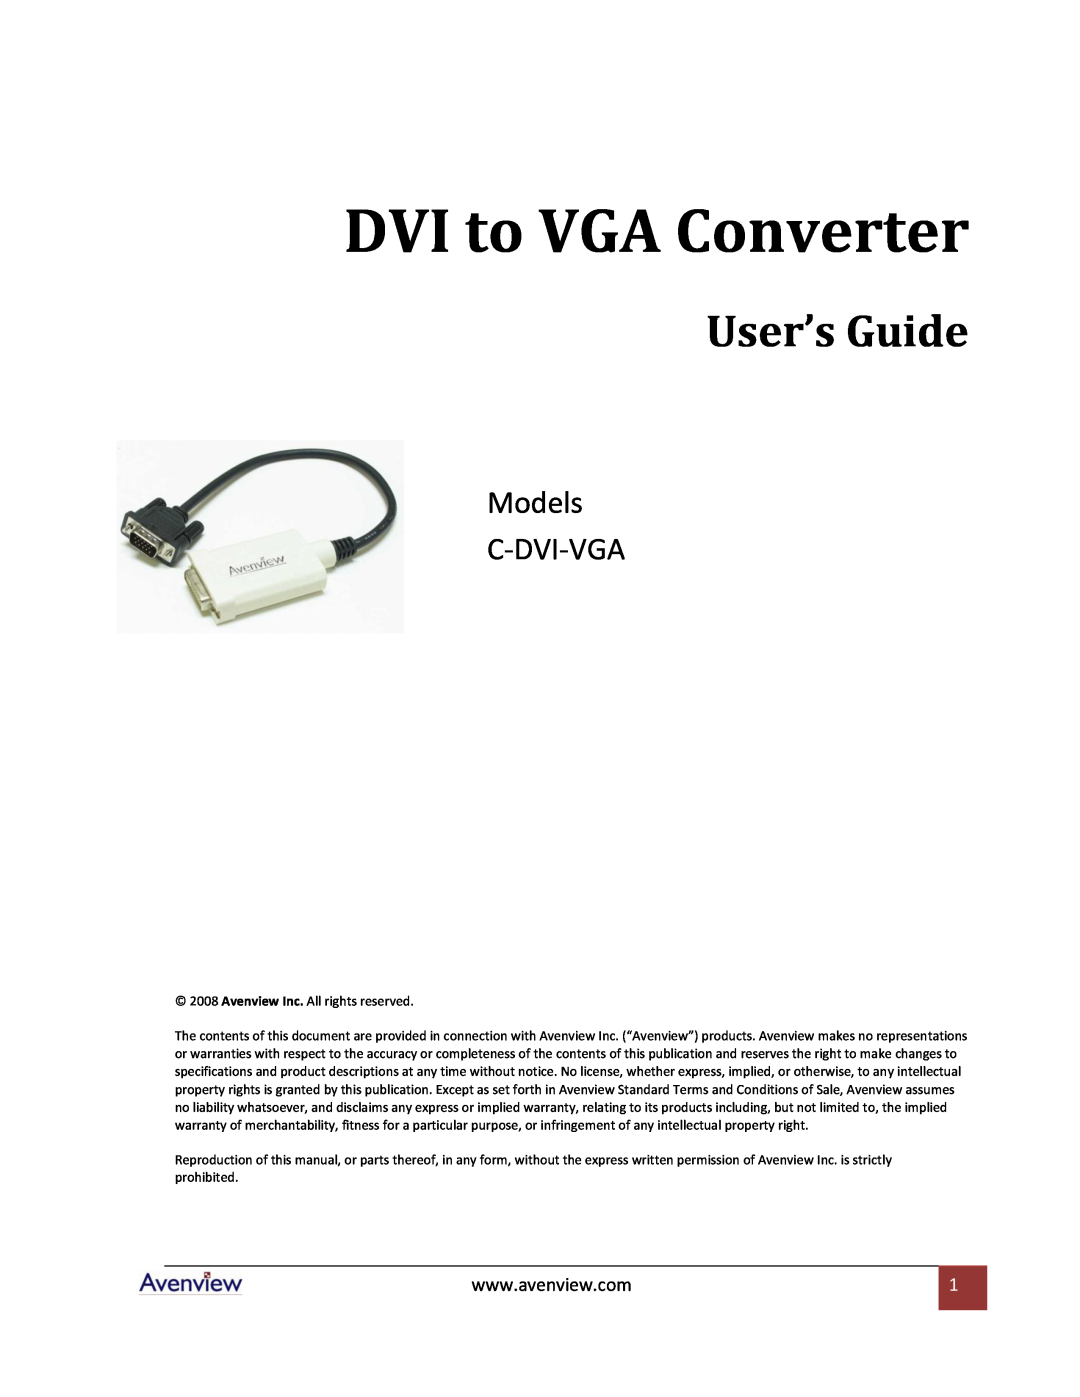 Avenview specifications DVI to VGA Converter, User’s Guide, Models C-DVI-VGA 